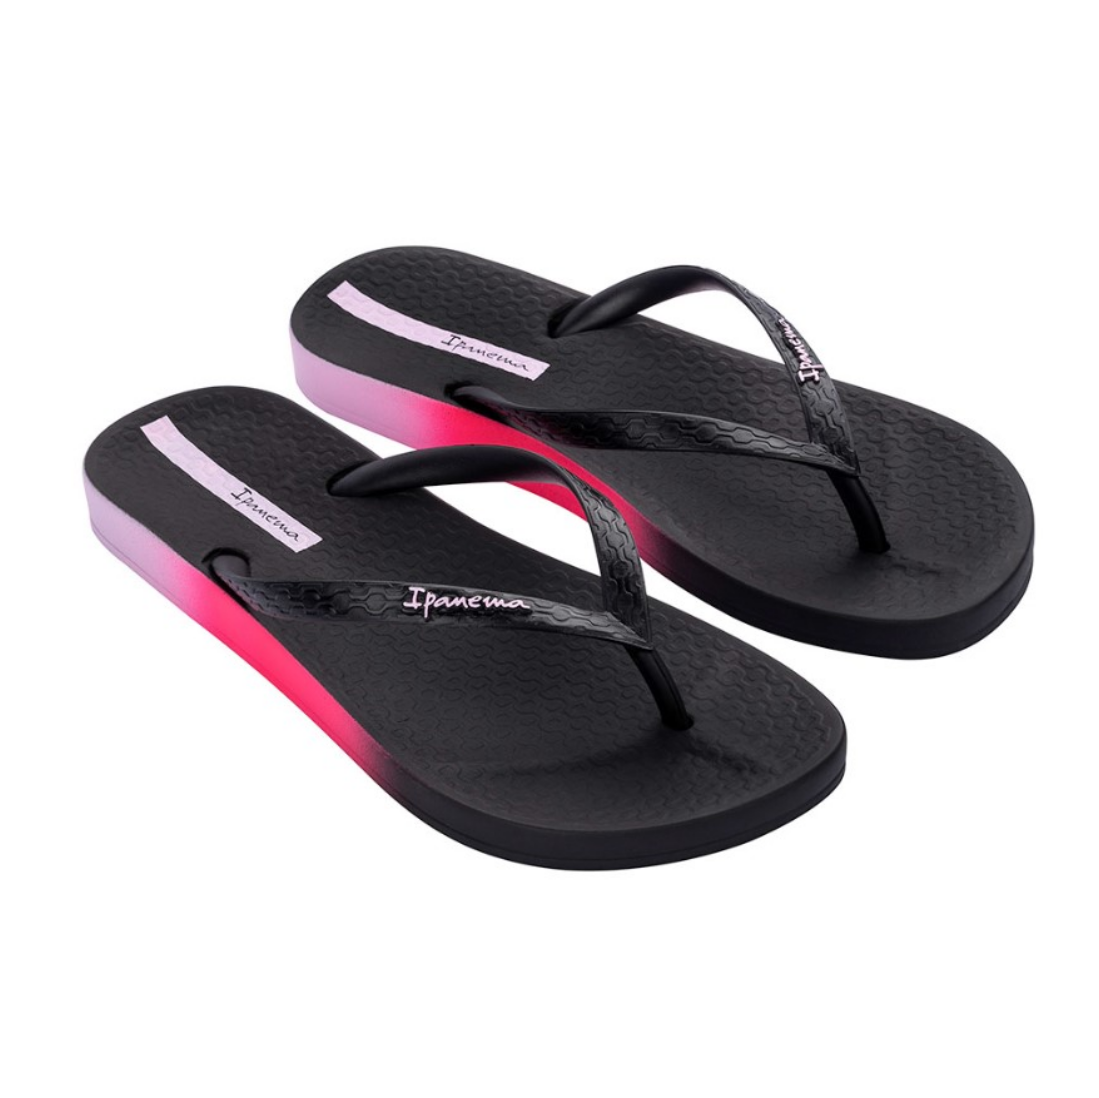 Ipanema | Shoes | Ipanema Coral Slippers Shoes Beach Travel Comfort Sandals  Flipflops | Poshmark